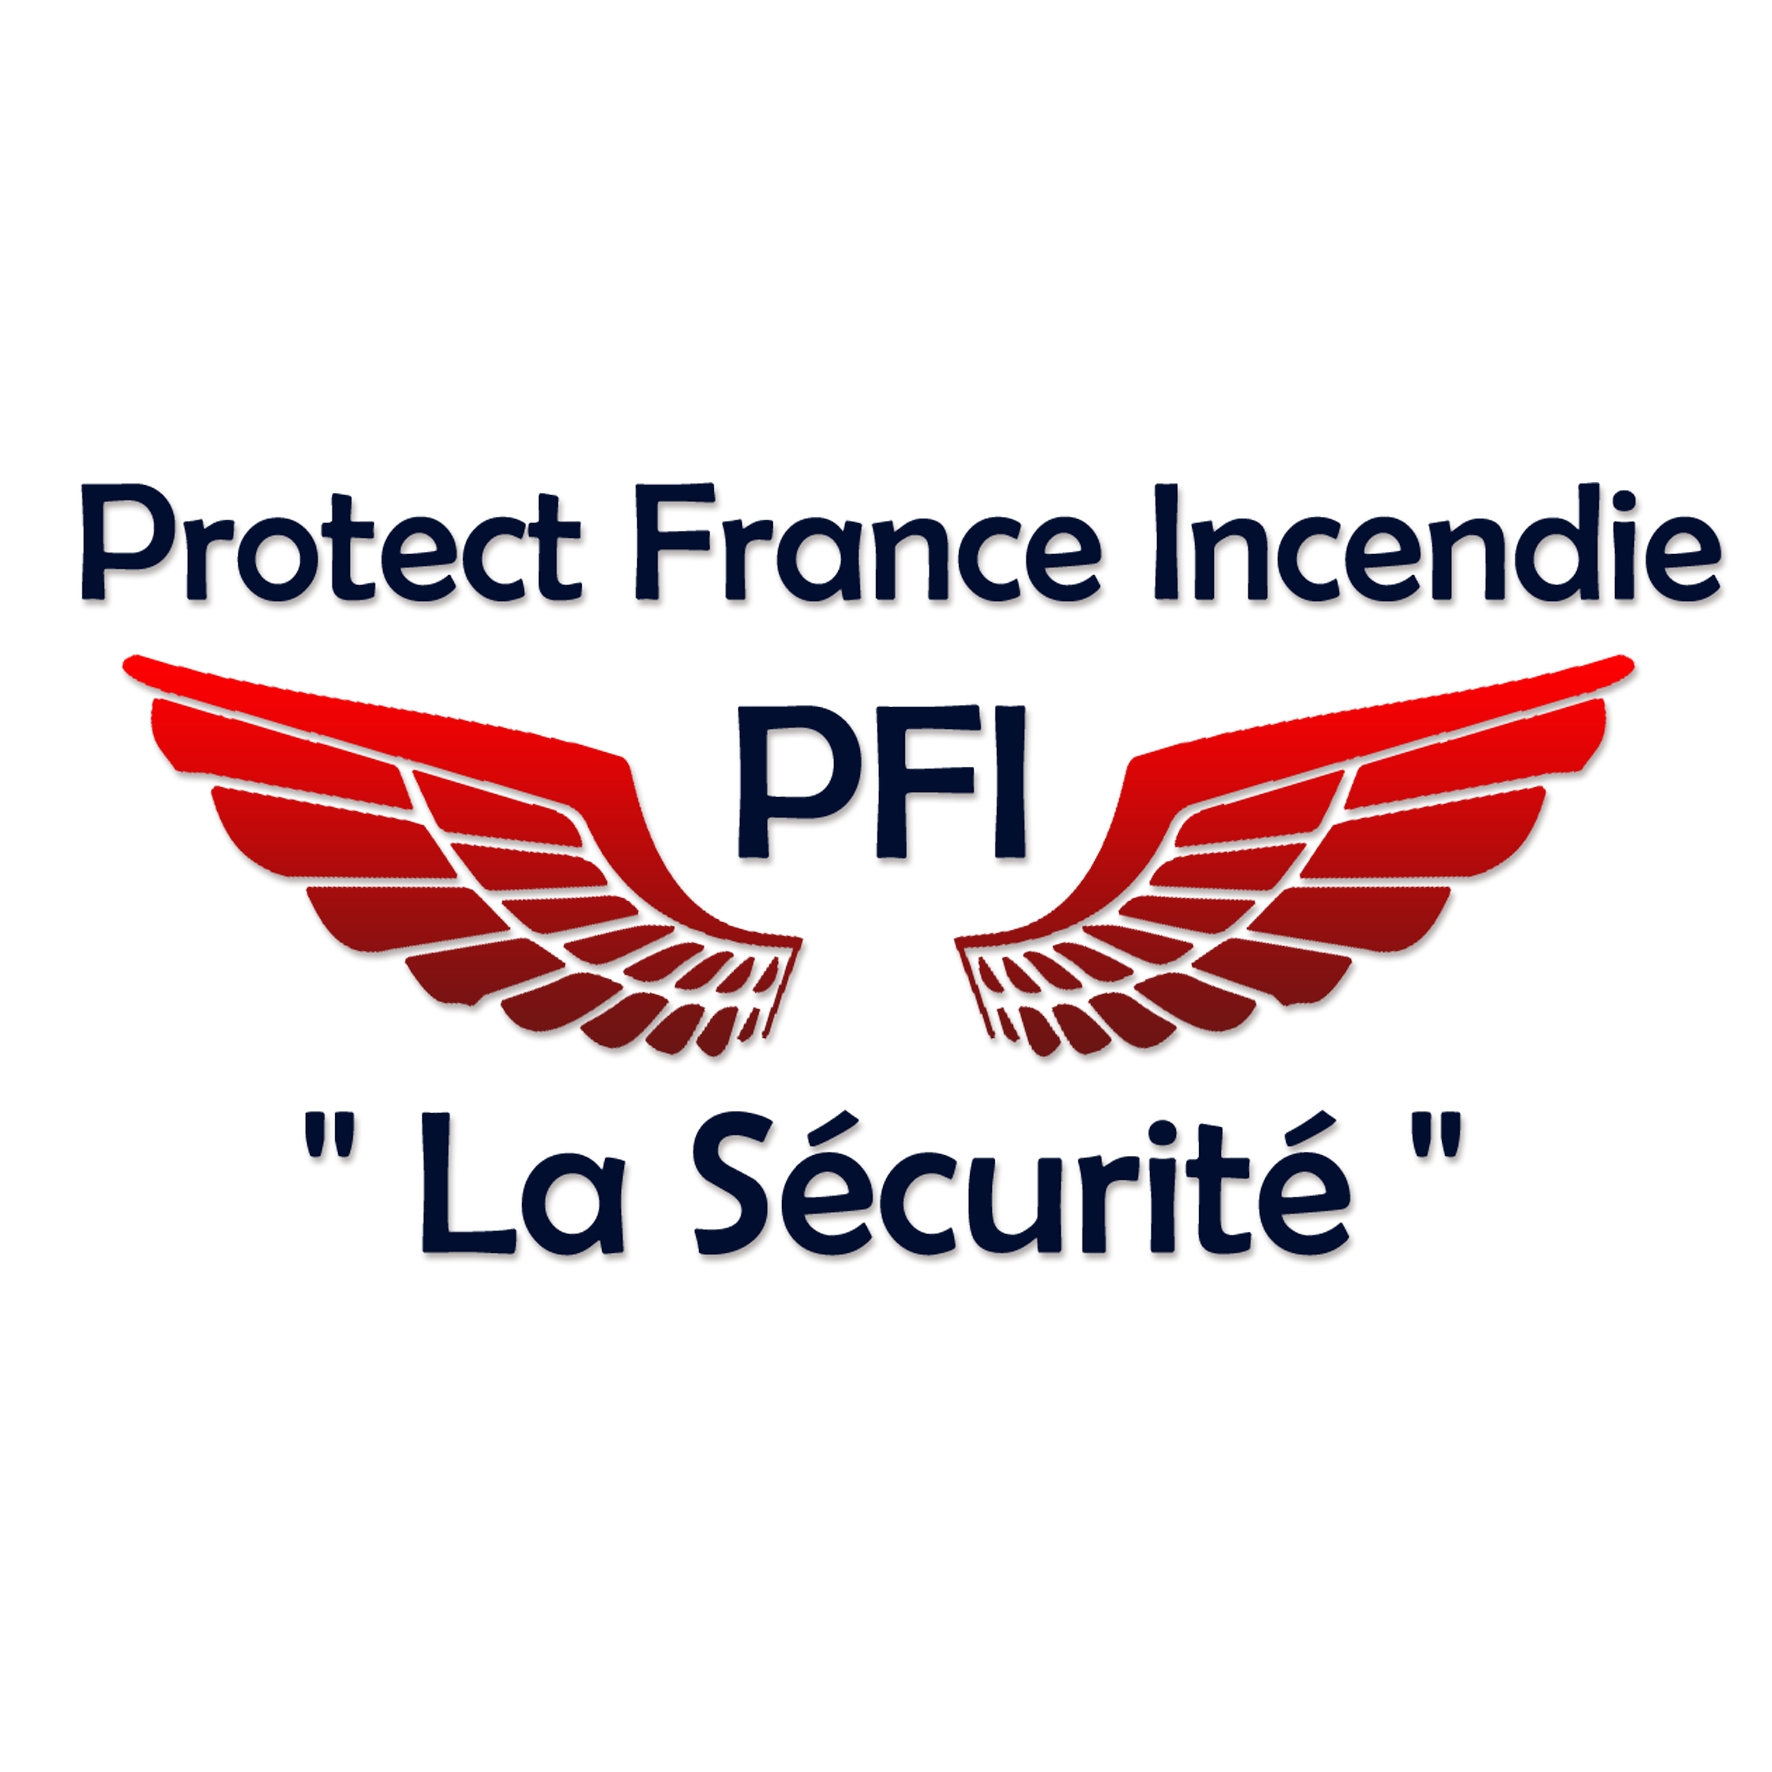 PFI Entreprises - Protect France Incendie Icon